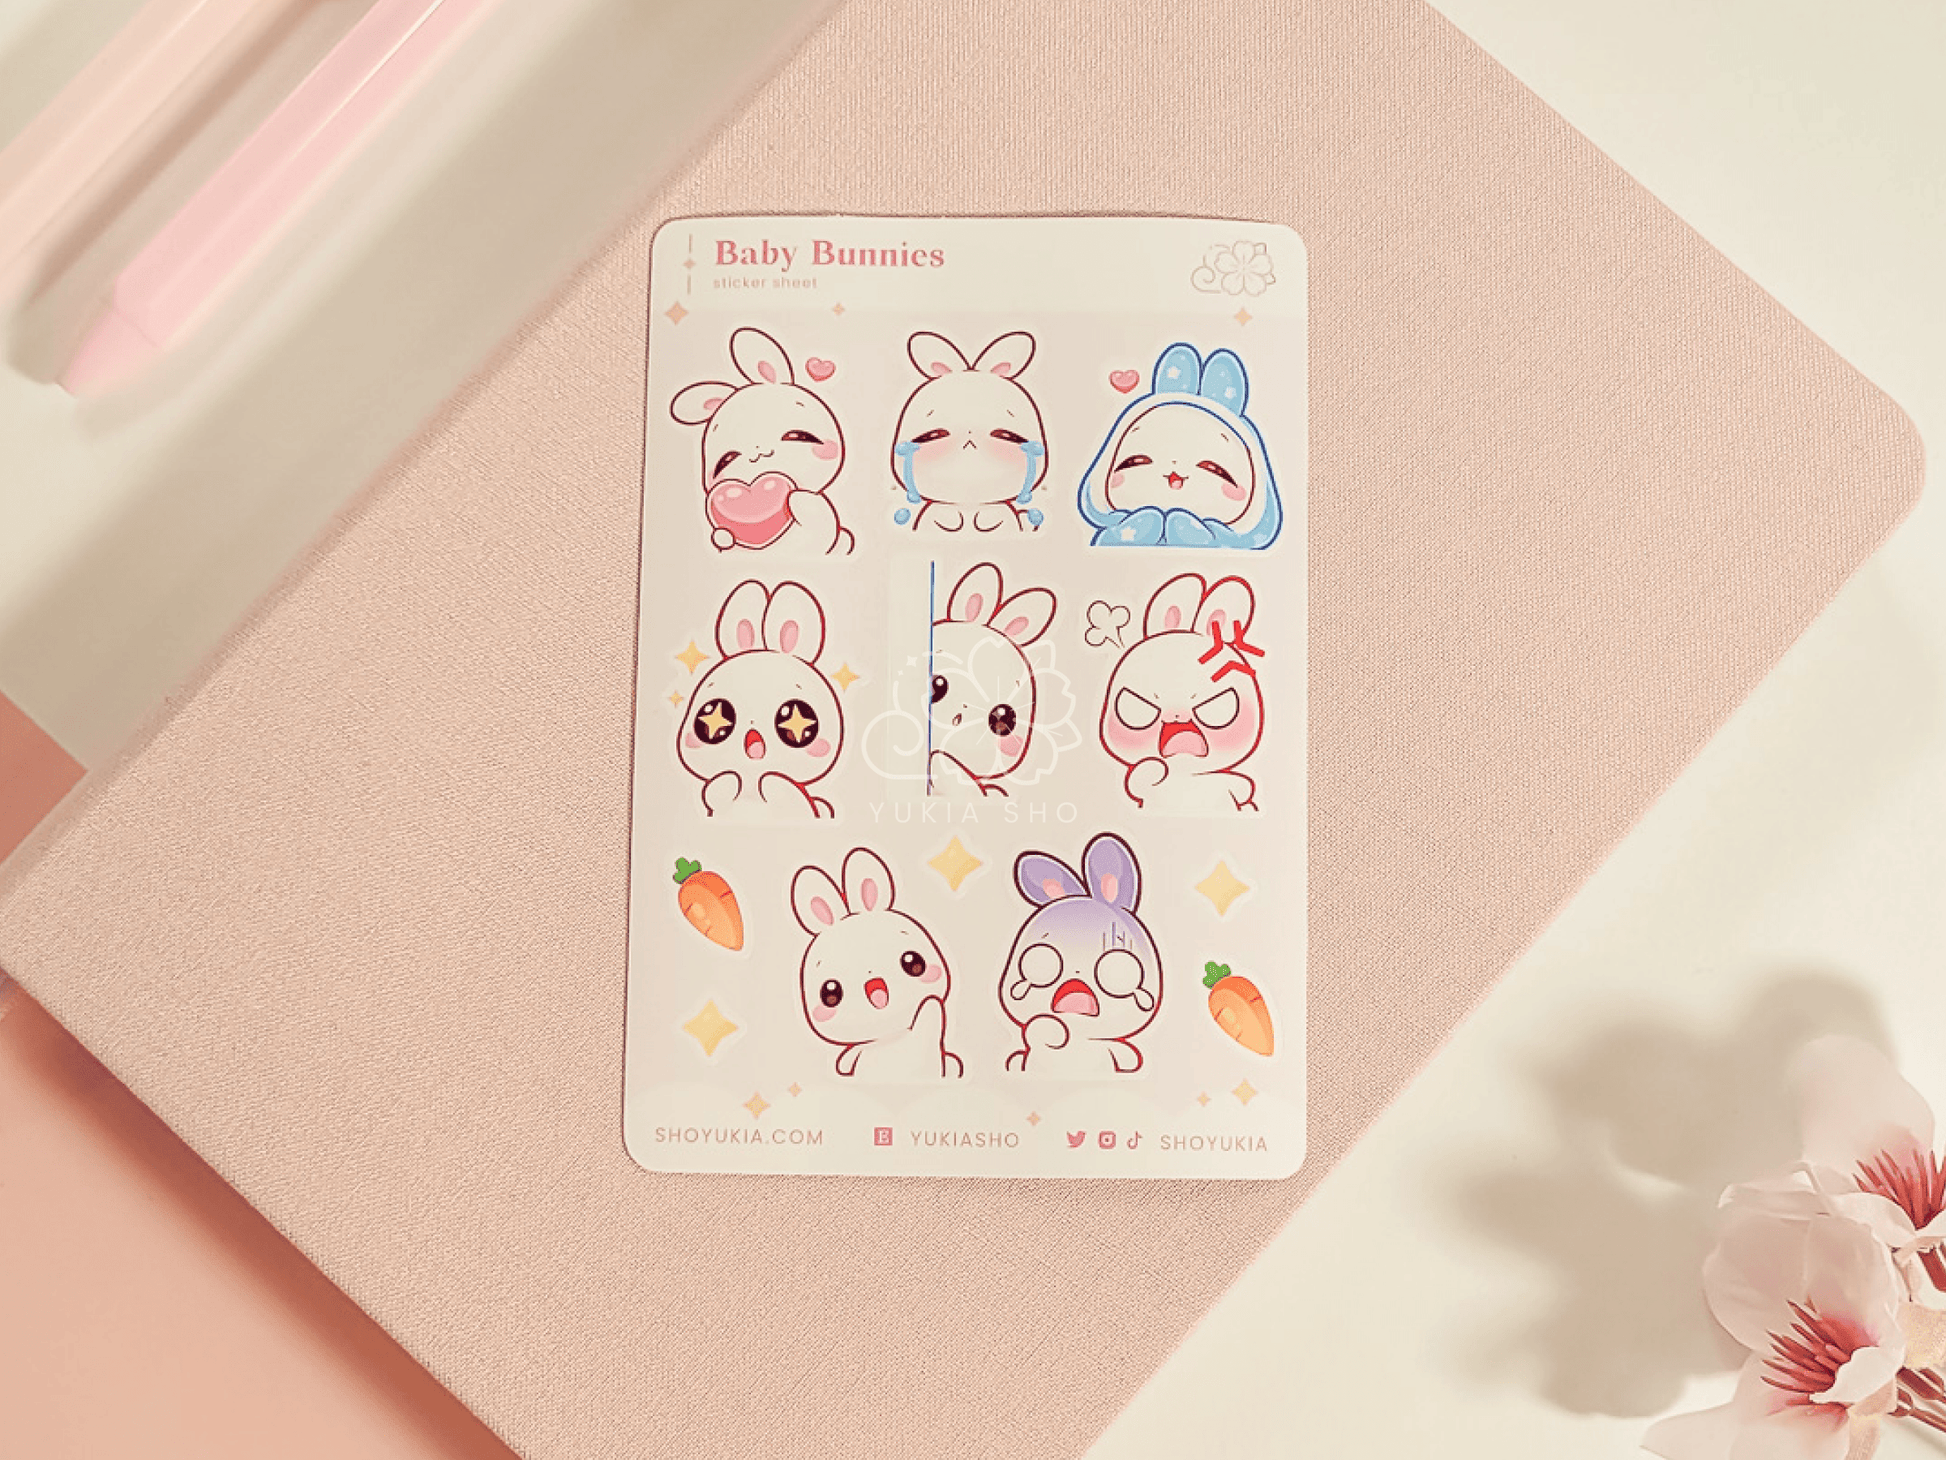 Baby Bunnies Mini Sticker Sheet - Yukia Sho Studios Ltd.